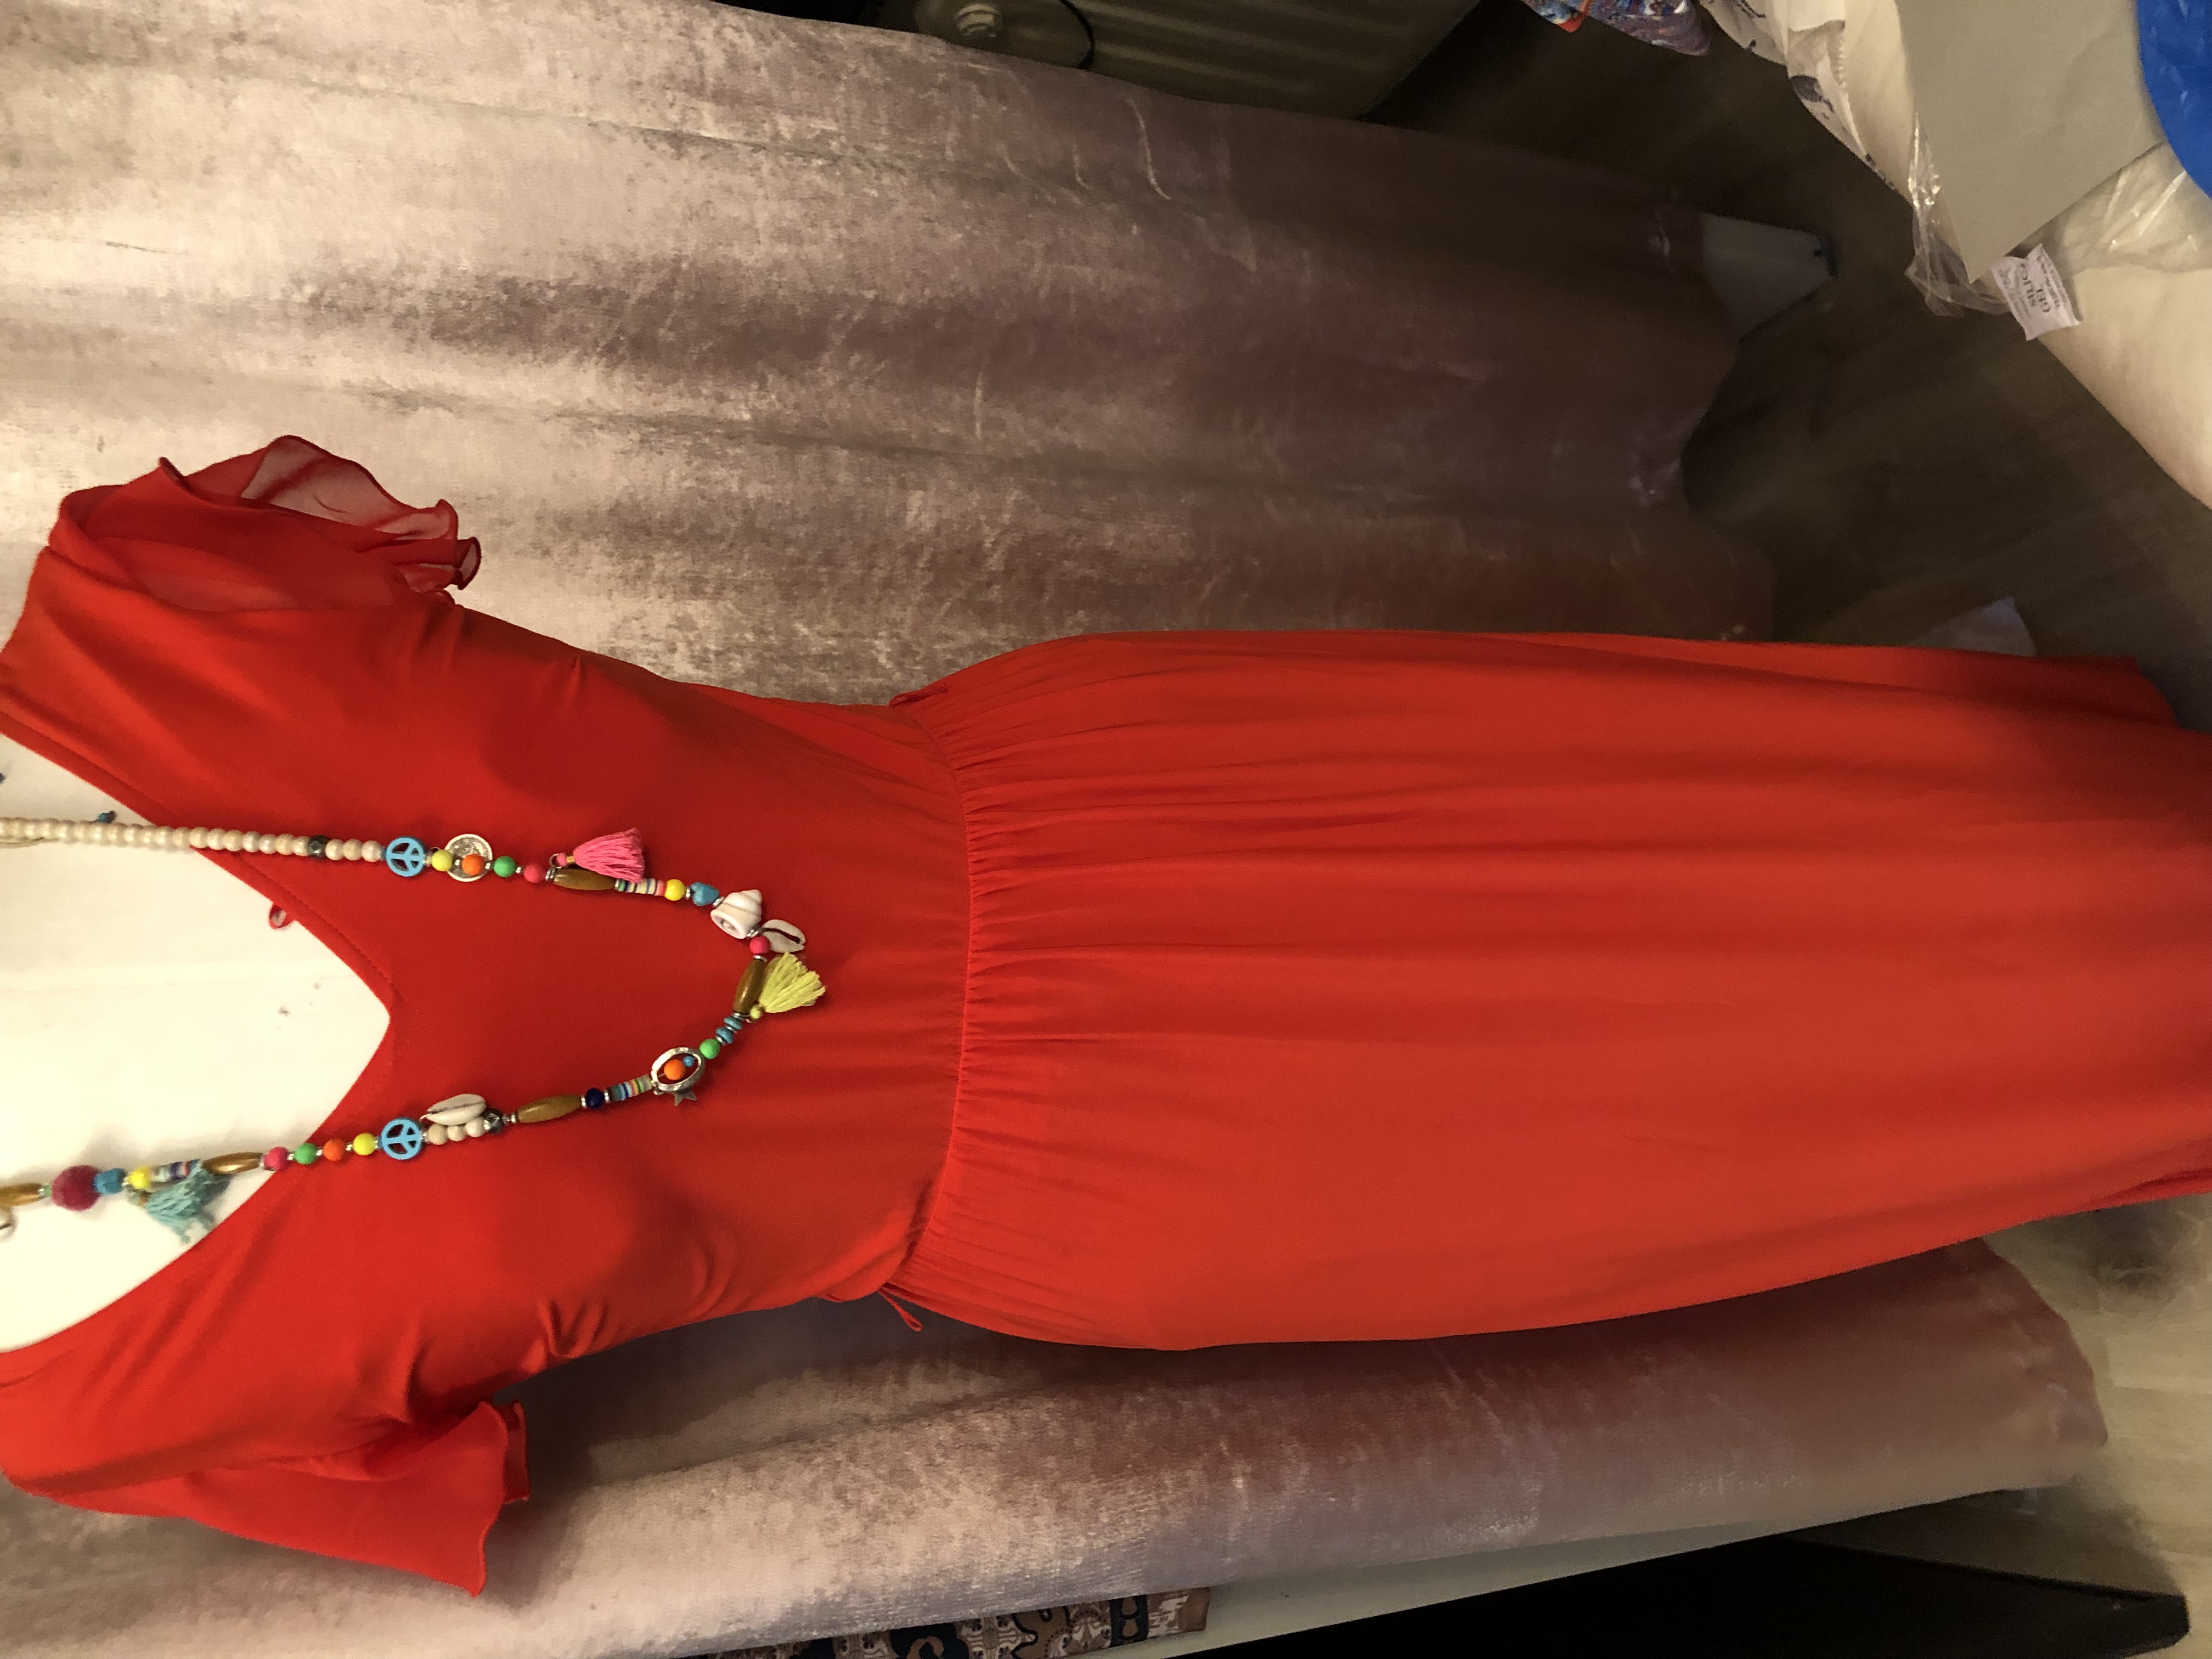 robe rouge longue